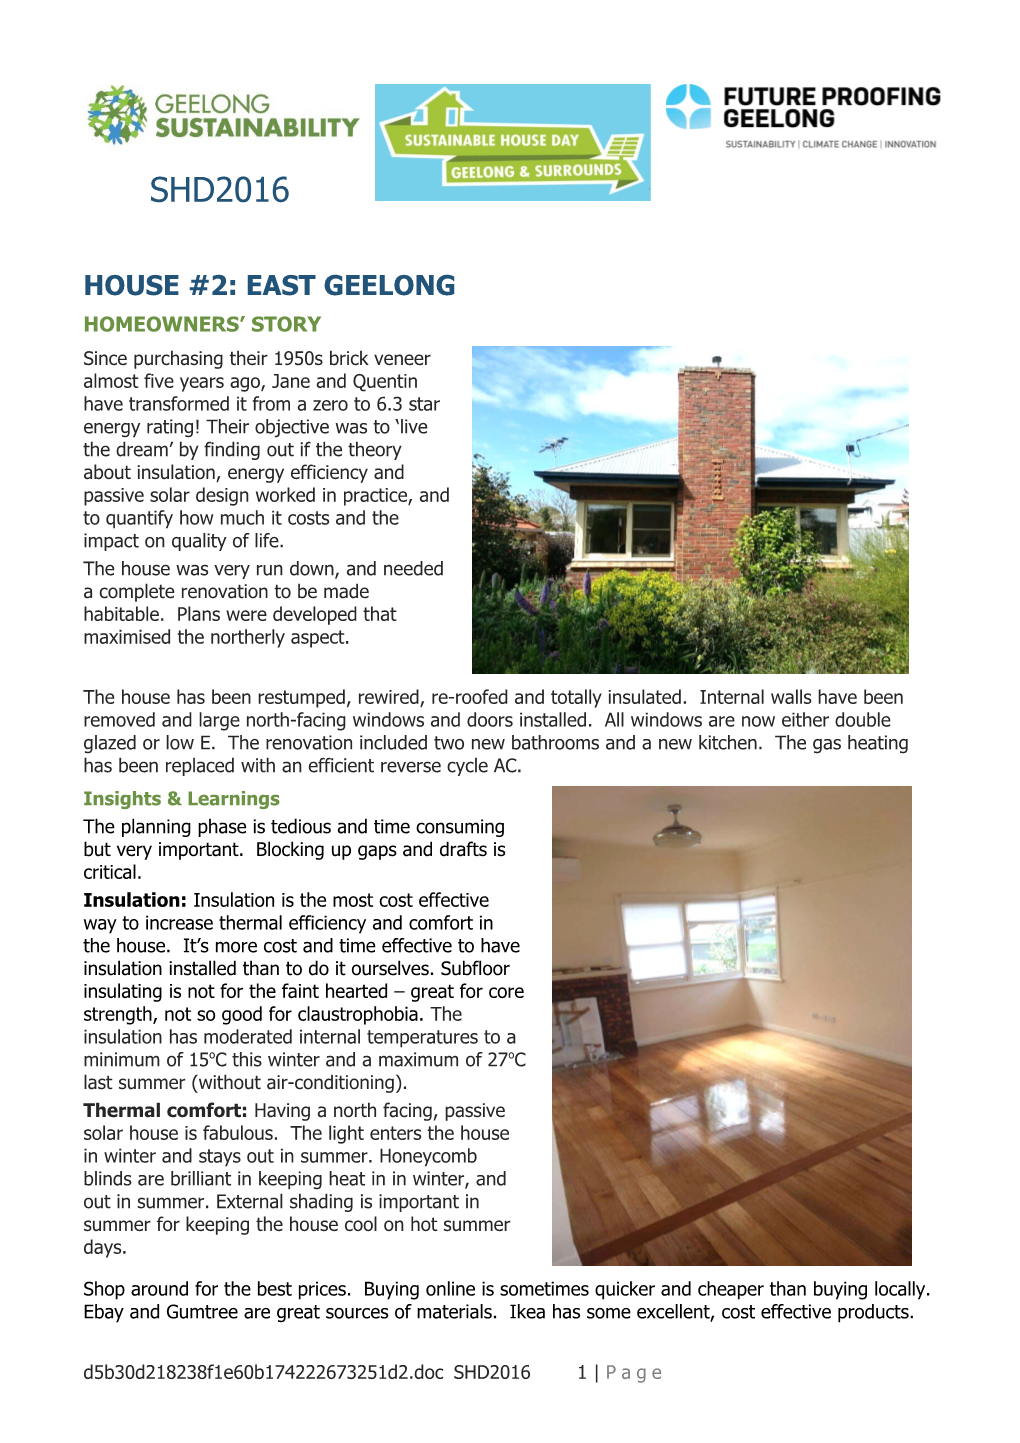 House #2: East Geelong